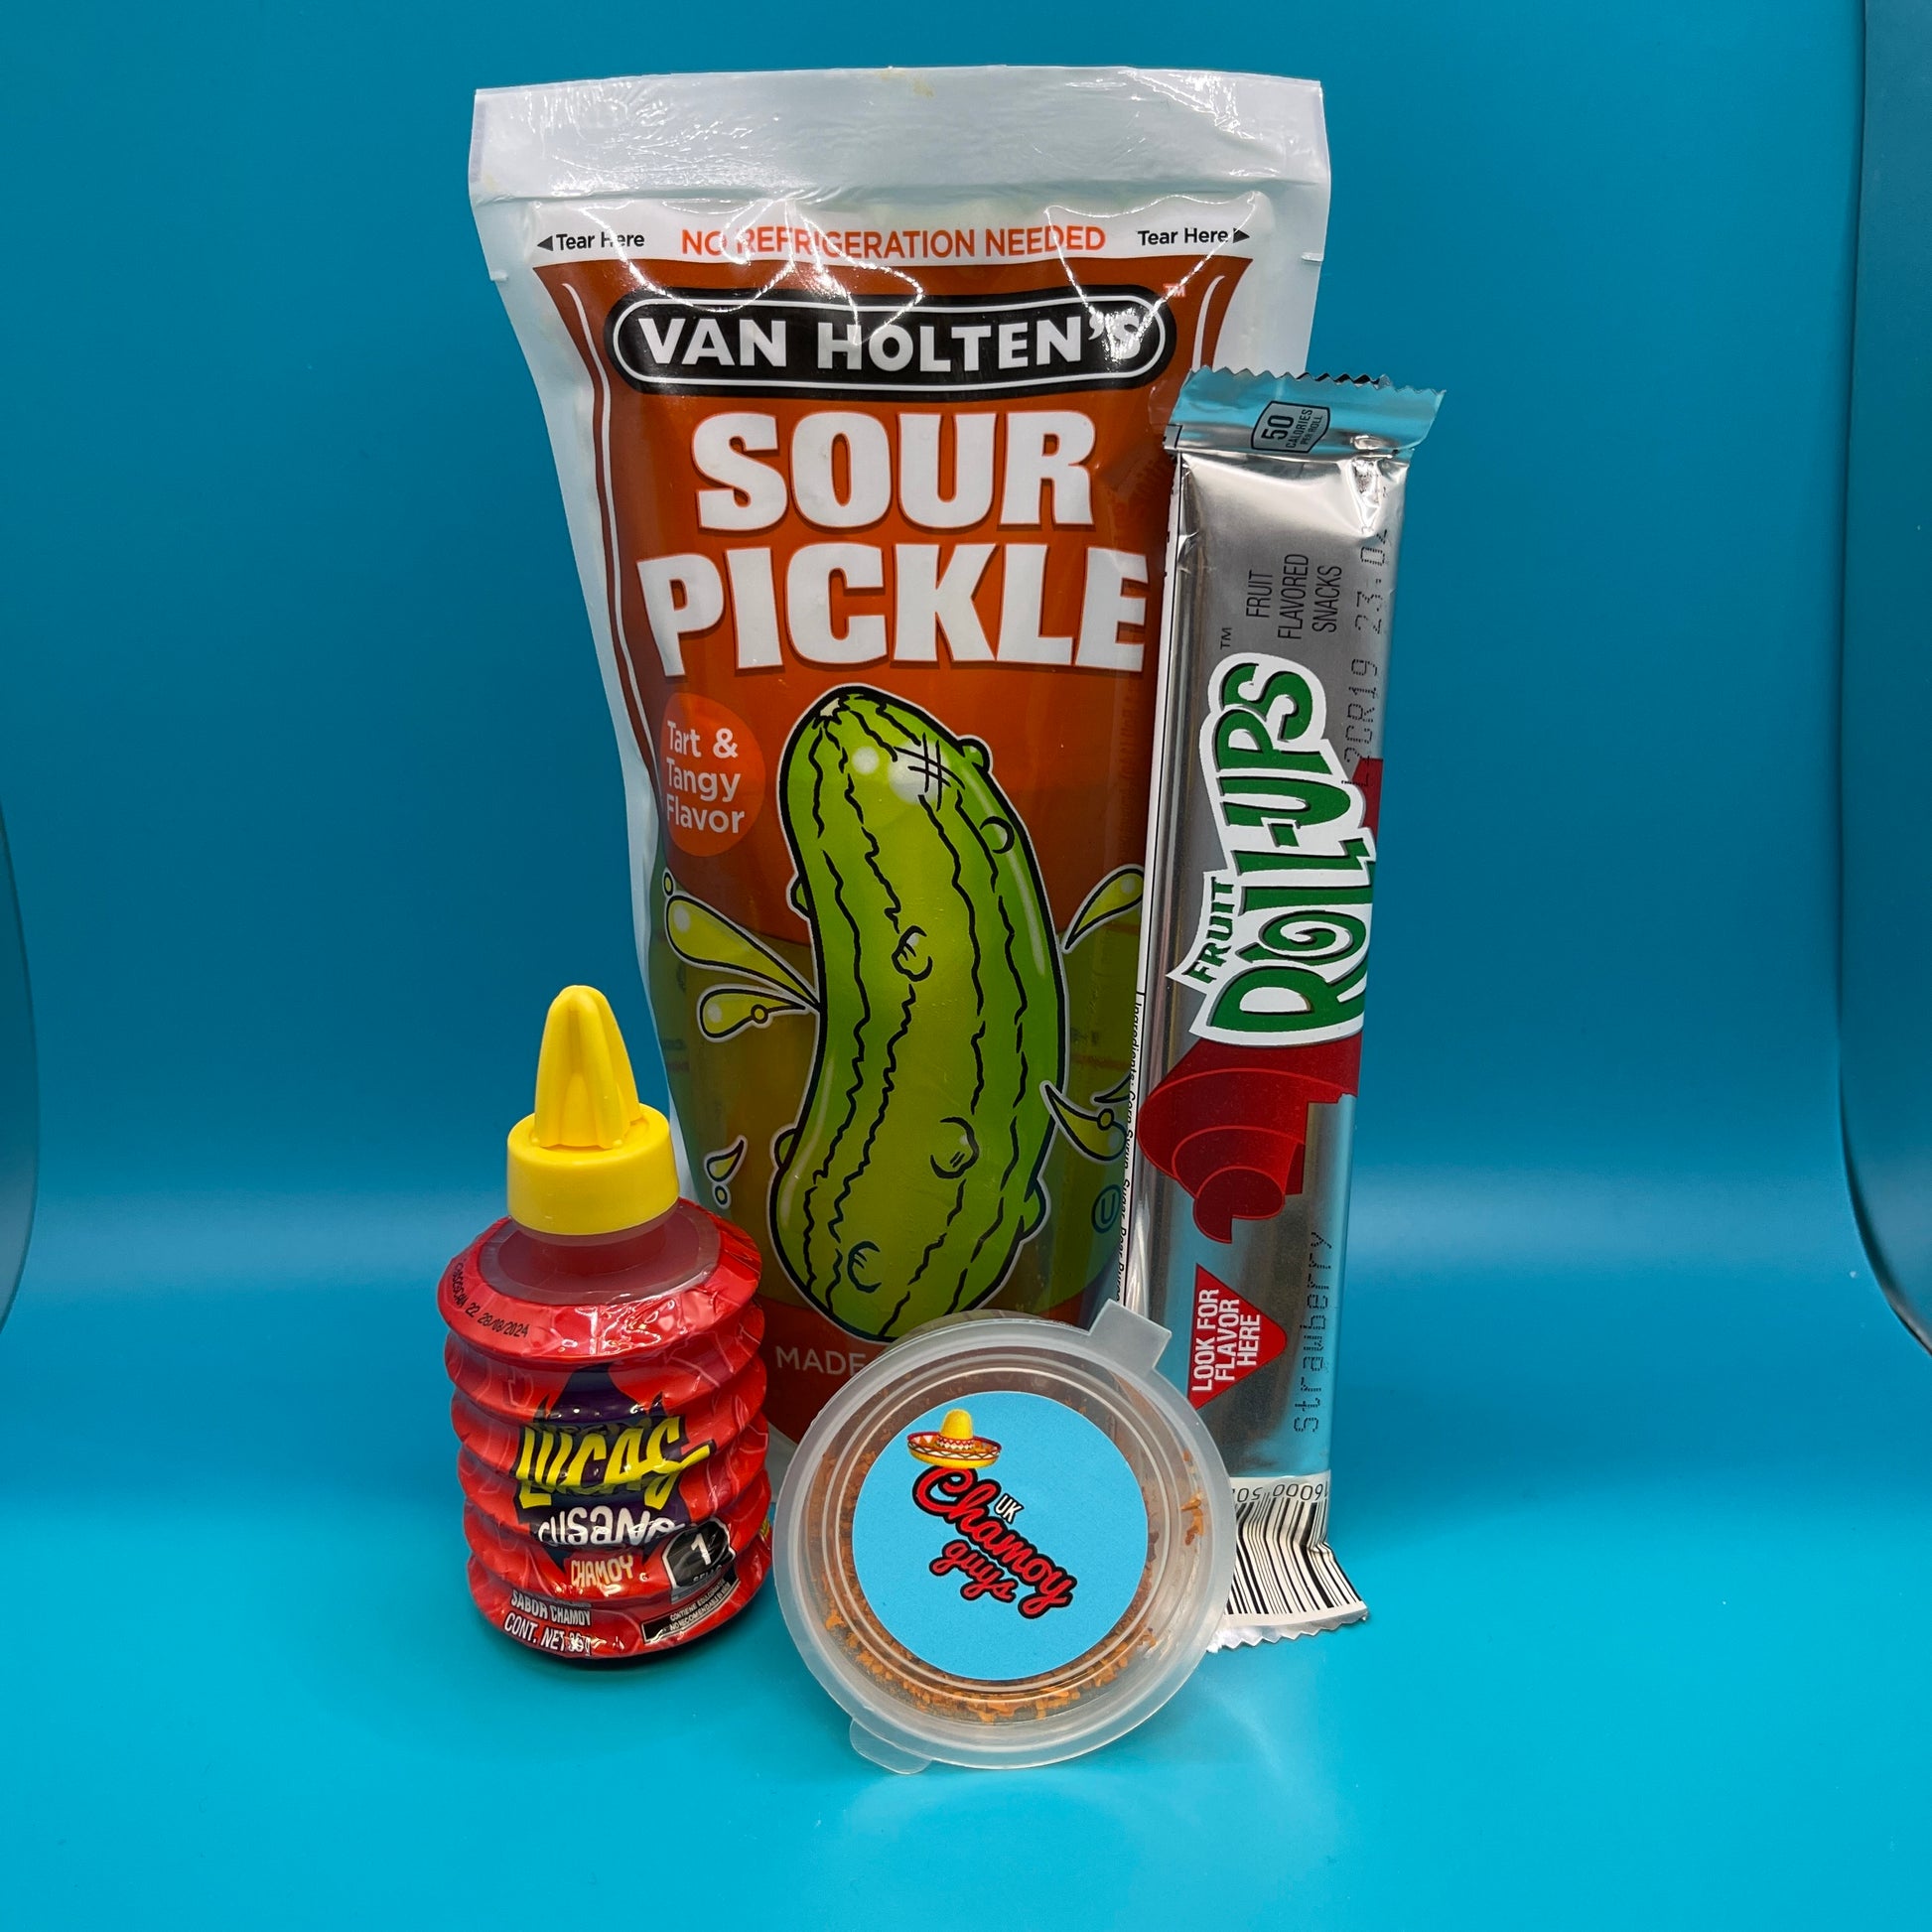 Chamoy Pickle Kit, Size: Varies